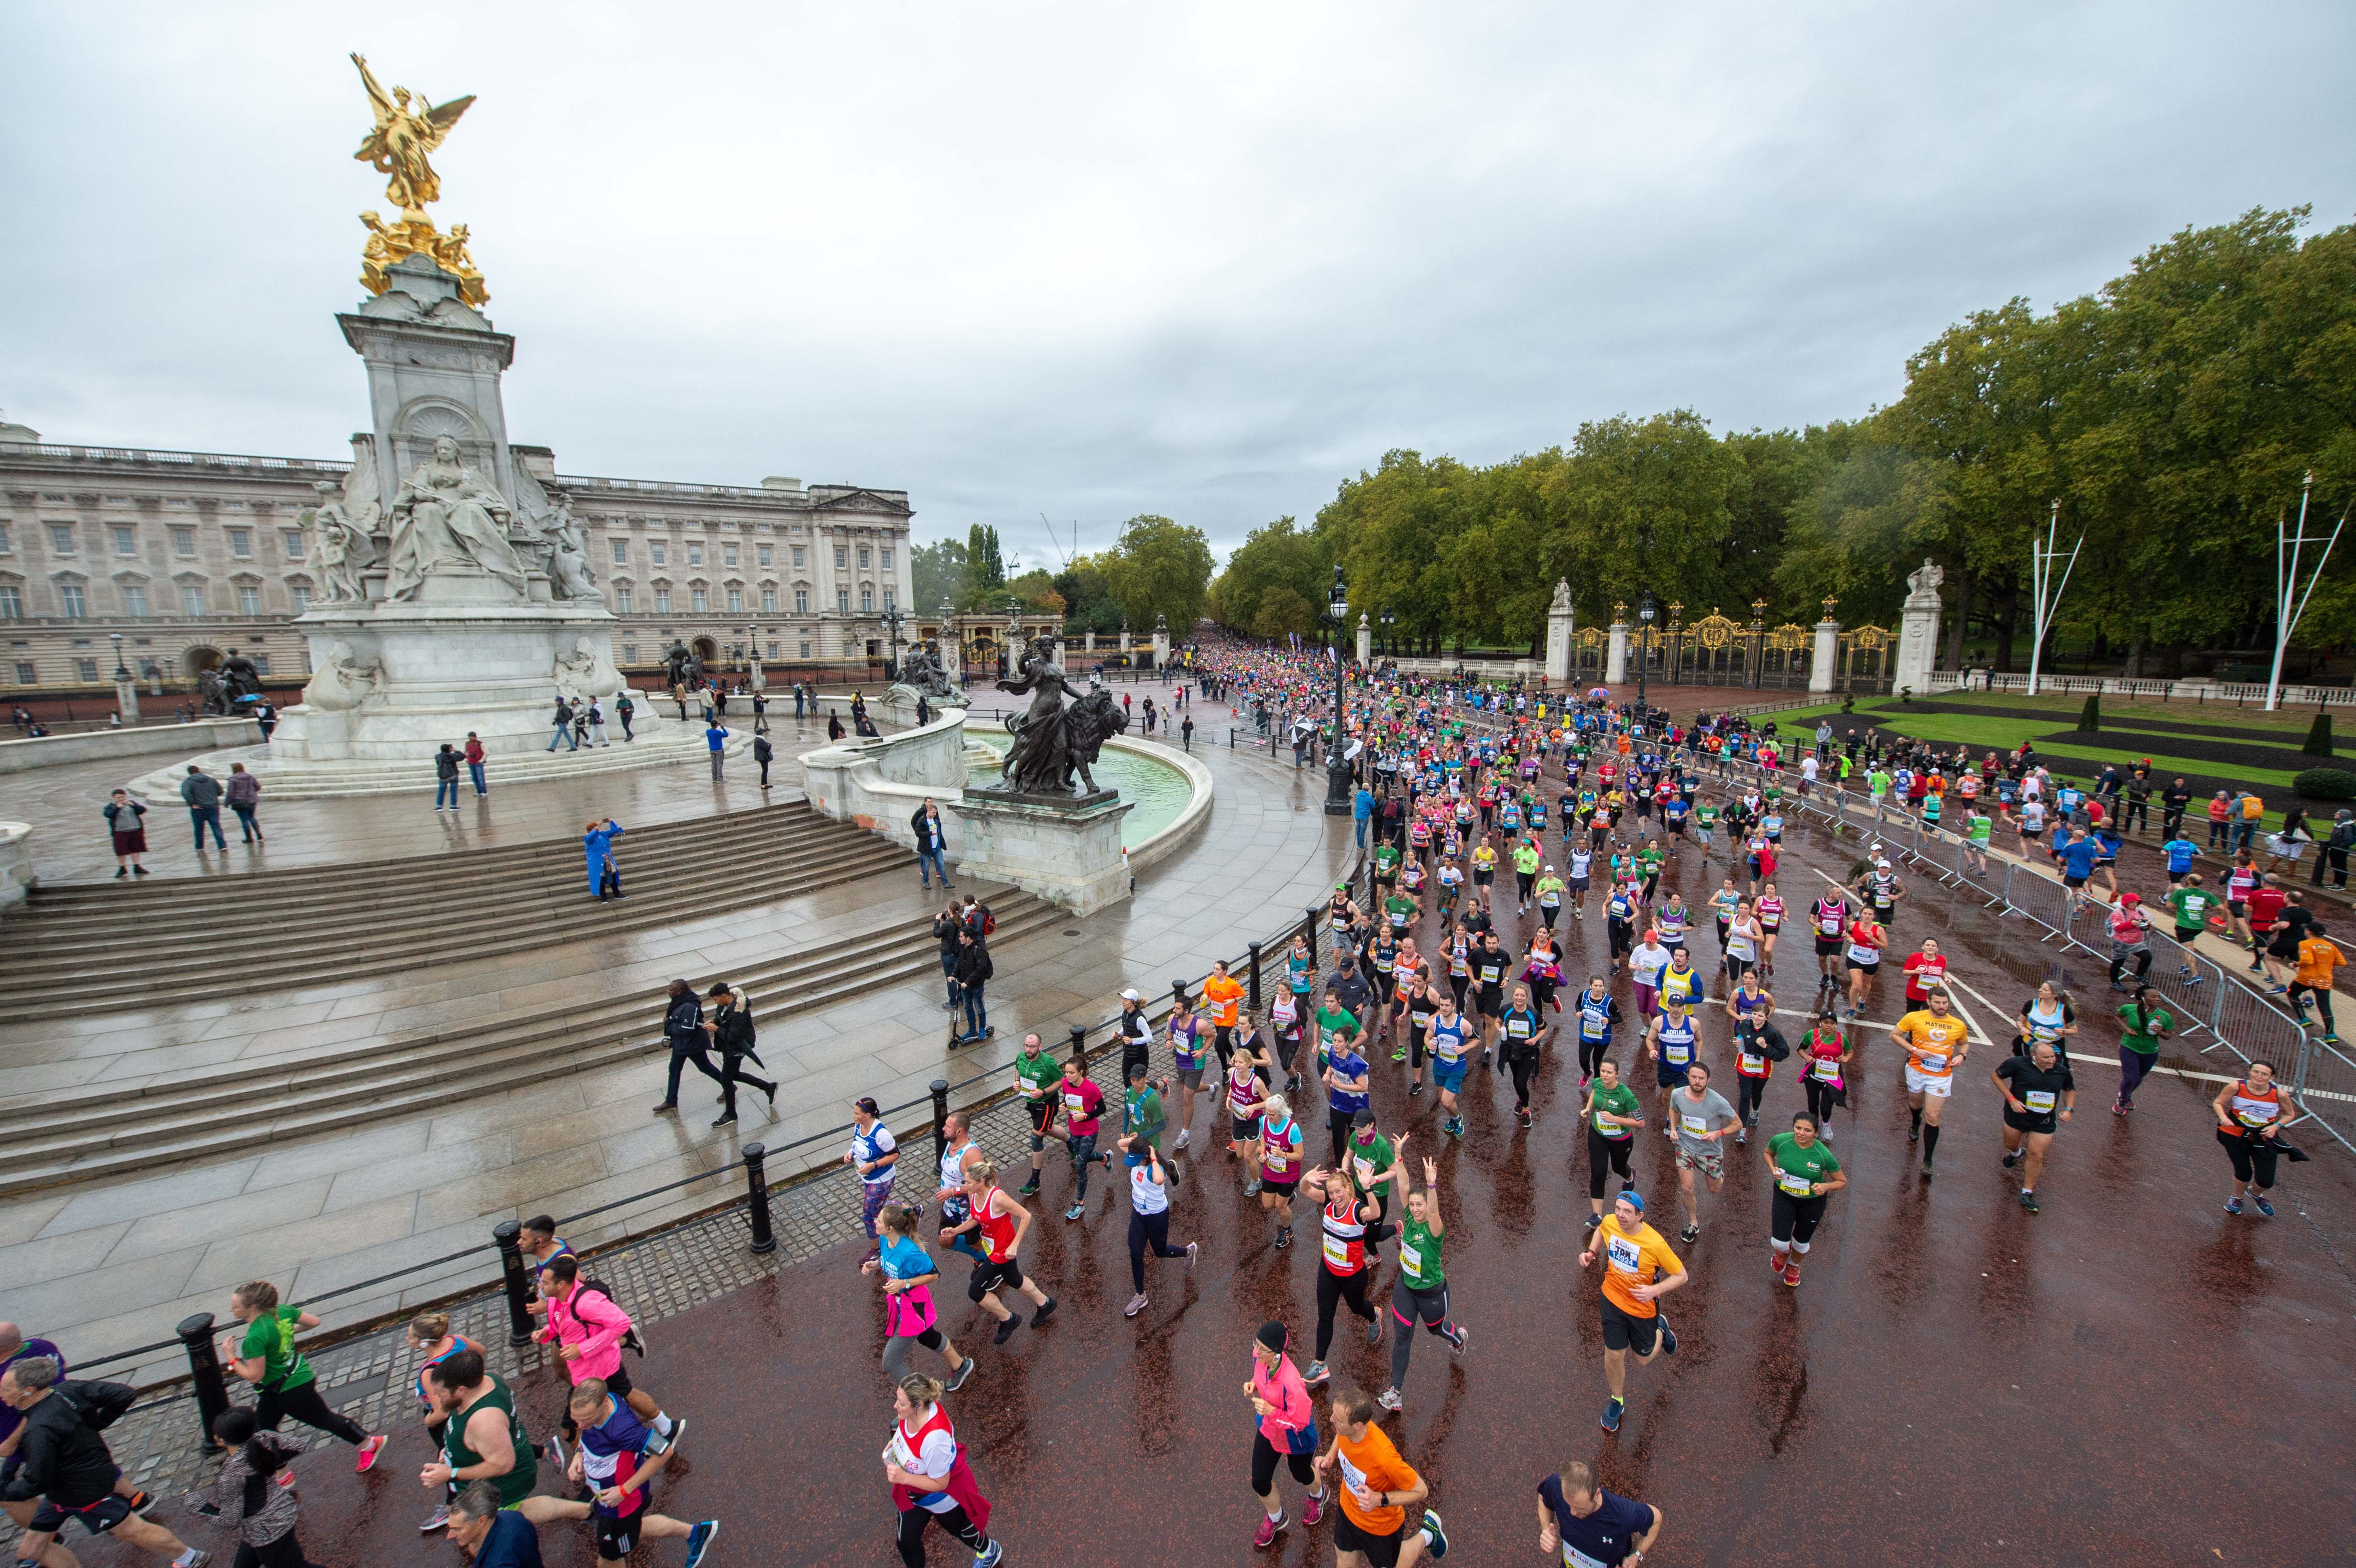 Marathon runners running past Buckingham Palace as part of the Royal Park half 